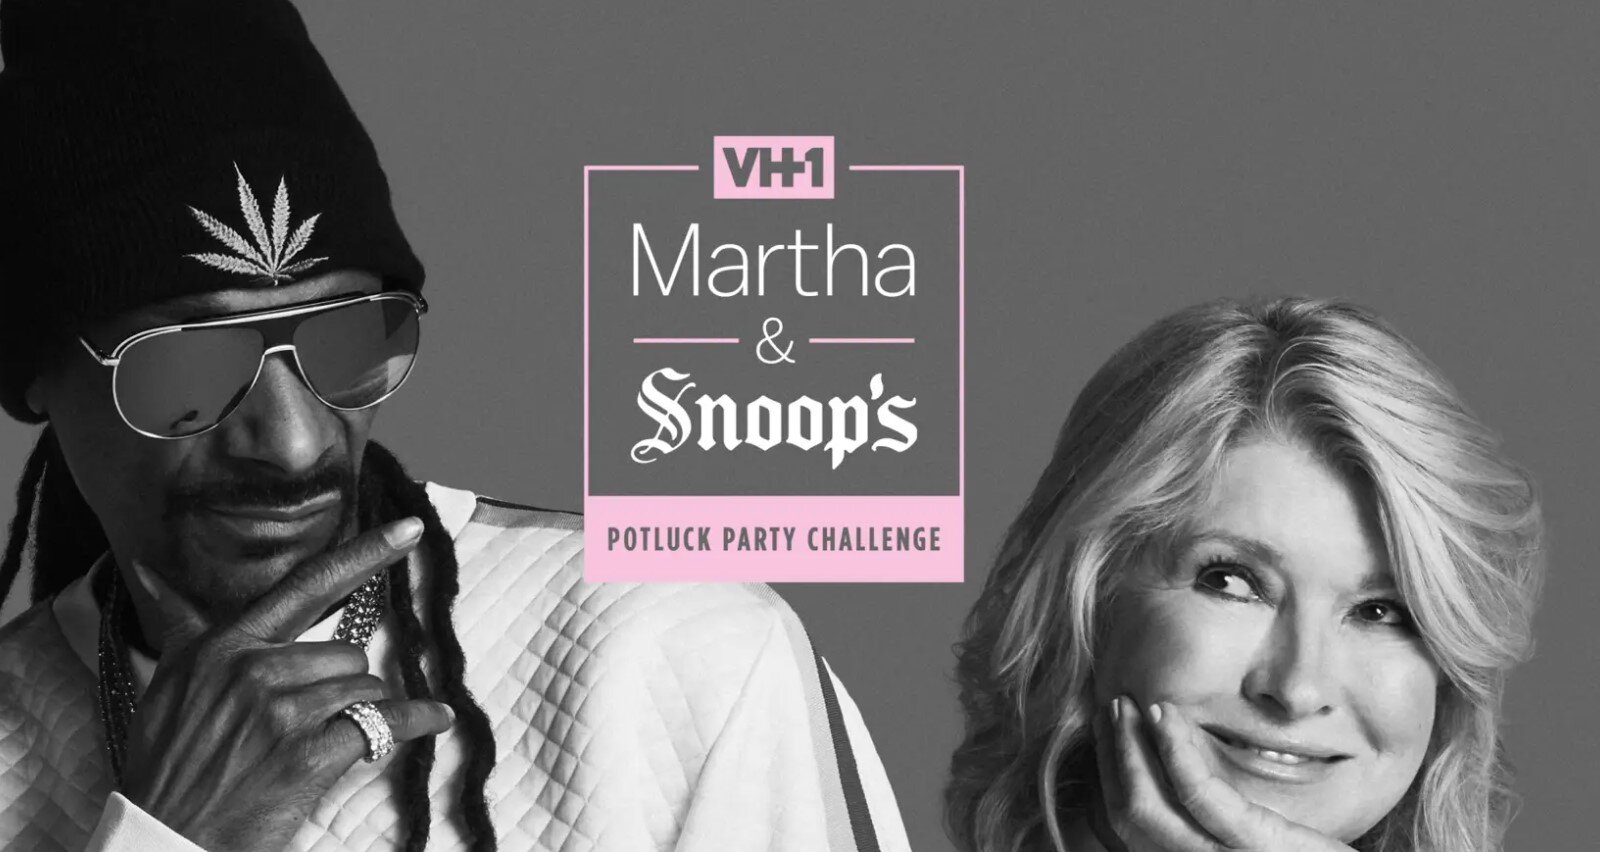 VH1 | MARTHA & SNOOP'S POTLUCK PARTY CHALLENGE